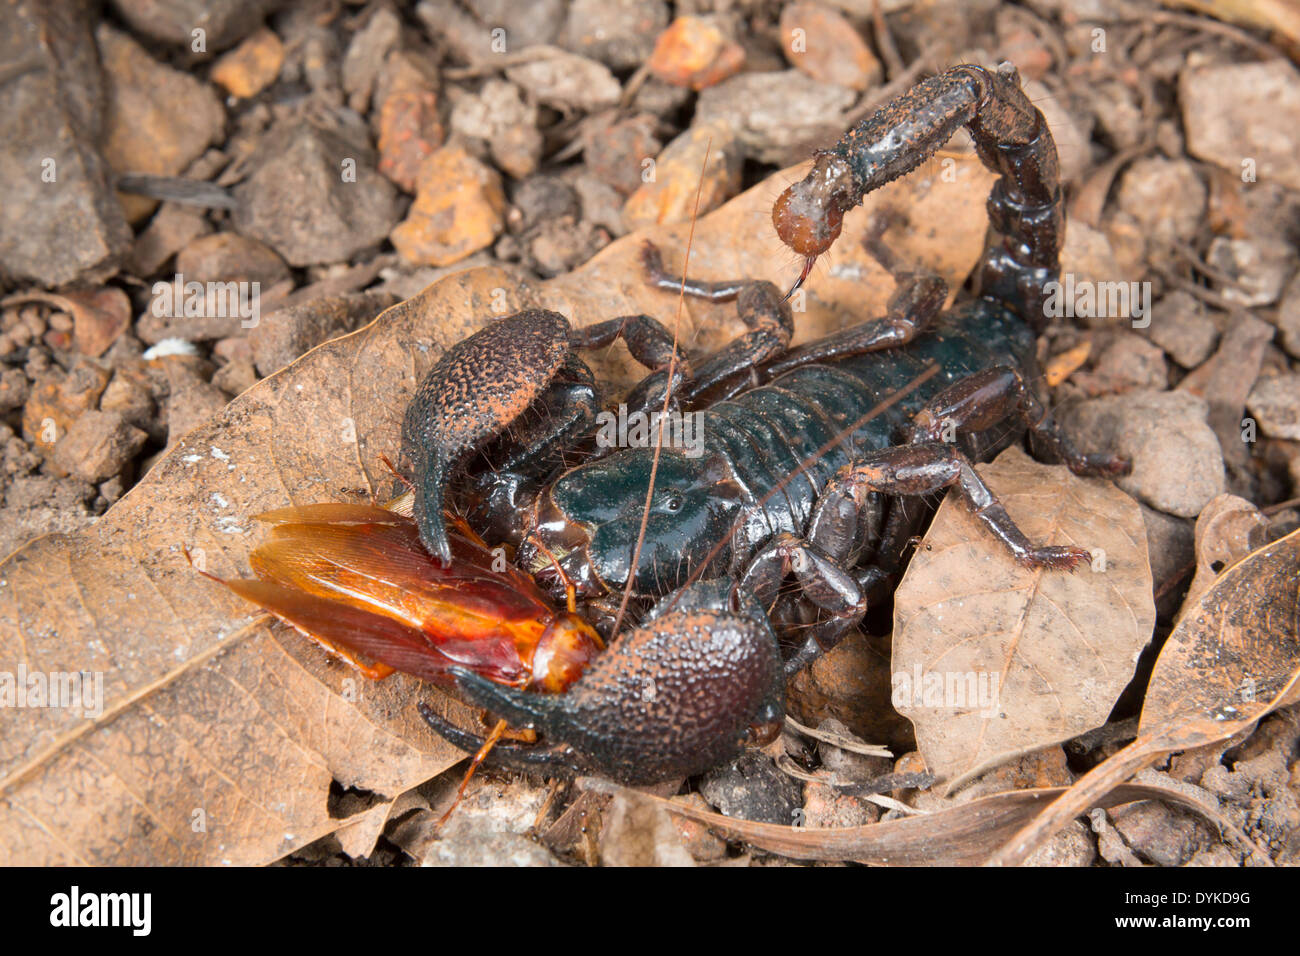 Emperor scorpion (Pandinus imperator) eating a cockroach, Ghana. Stock Photo